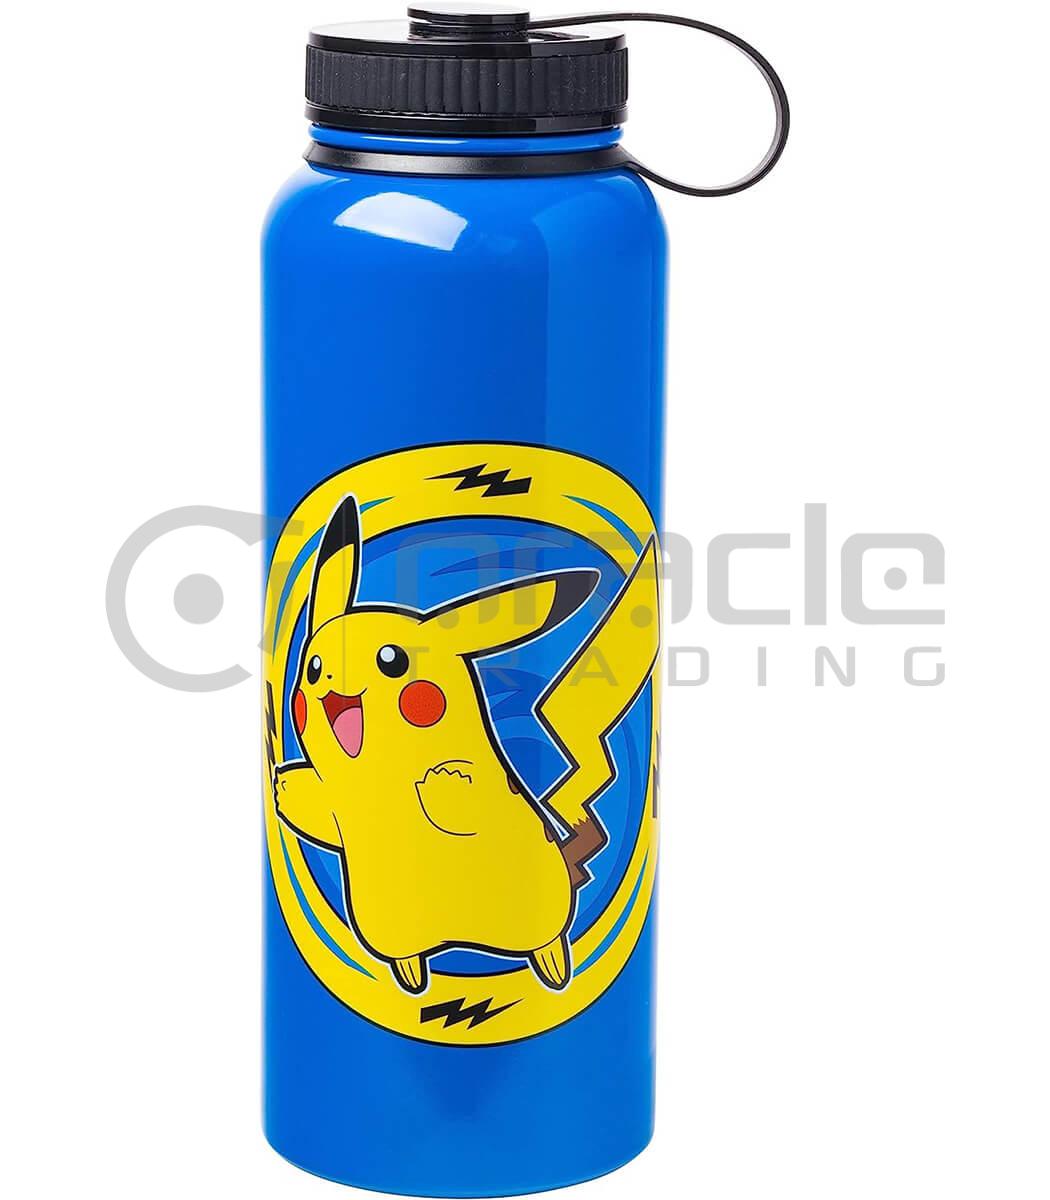 Pokémon Giant Water Bottle - Pikachu